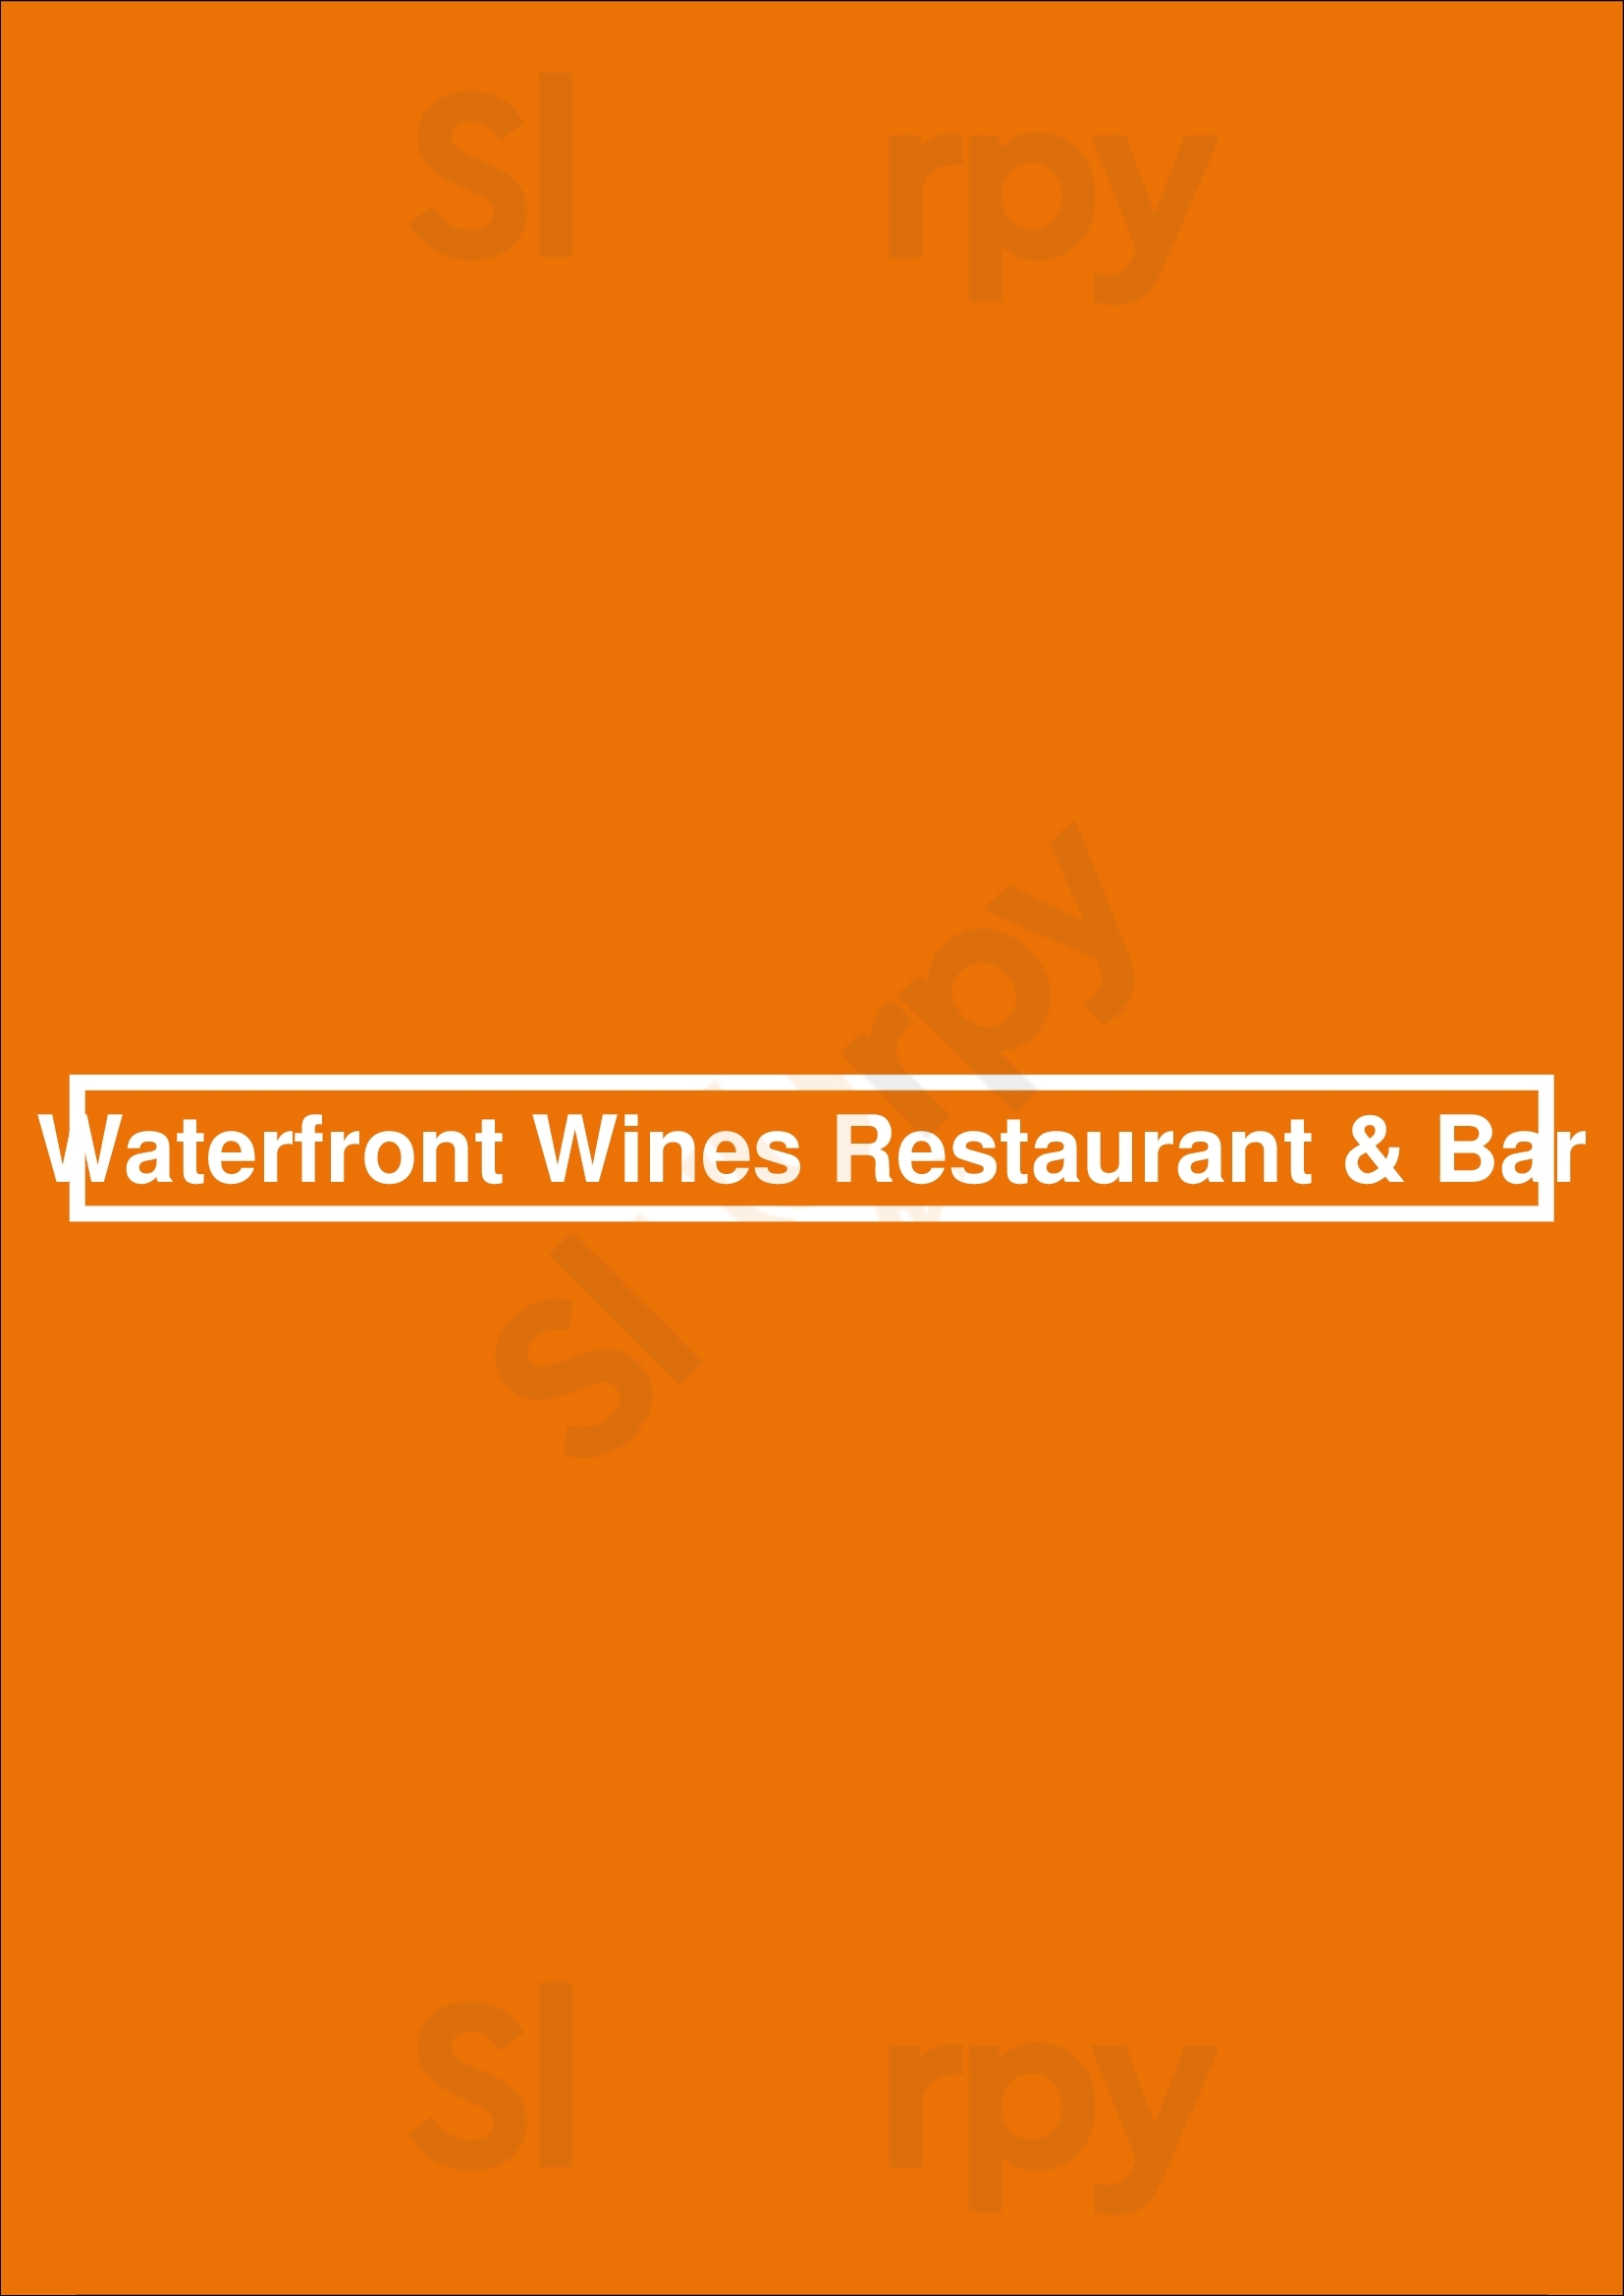 Waterfront Wines Restaurant & Bar Kelowna Menu - 1